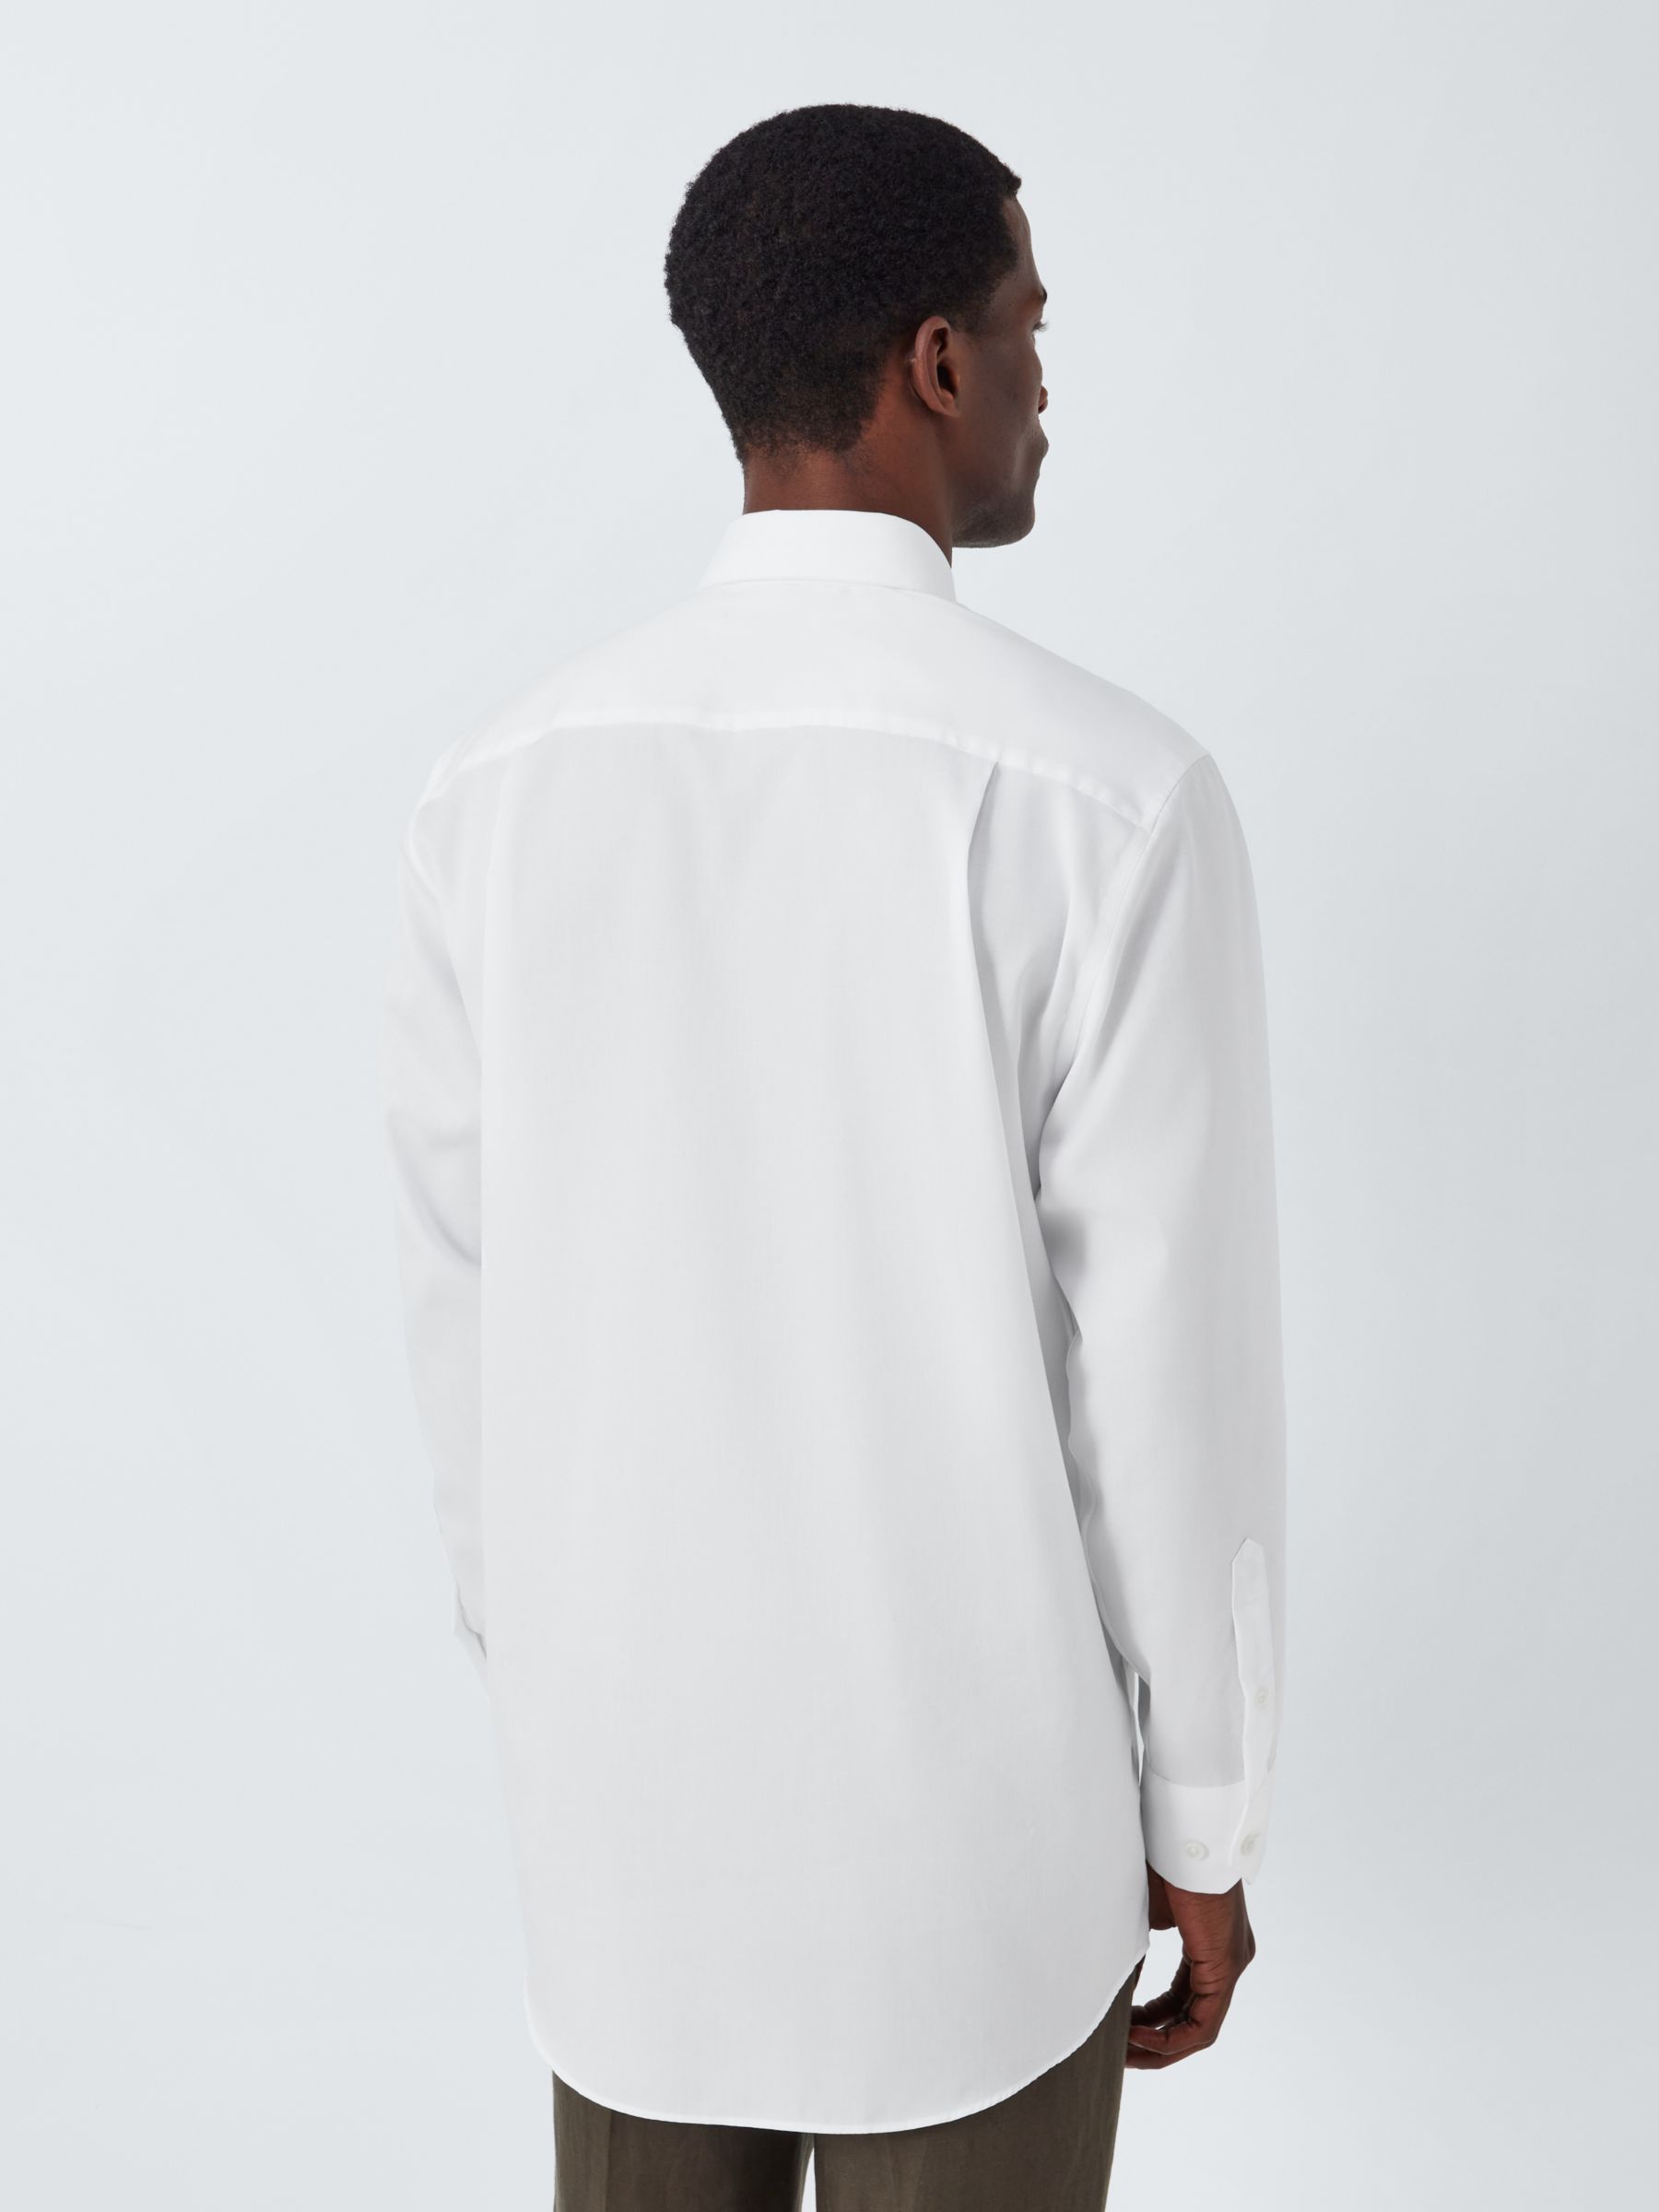 John Lewis Non Iron Twill Regular Fit Single Cuff Shirt, White, 16.5L